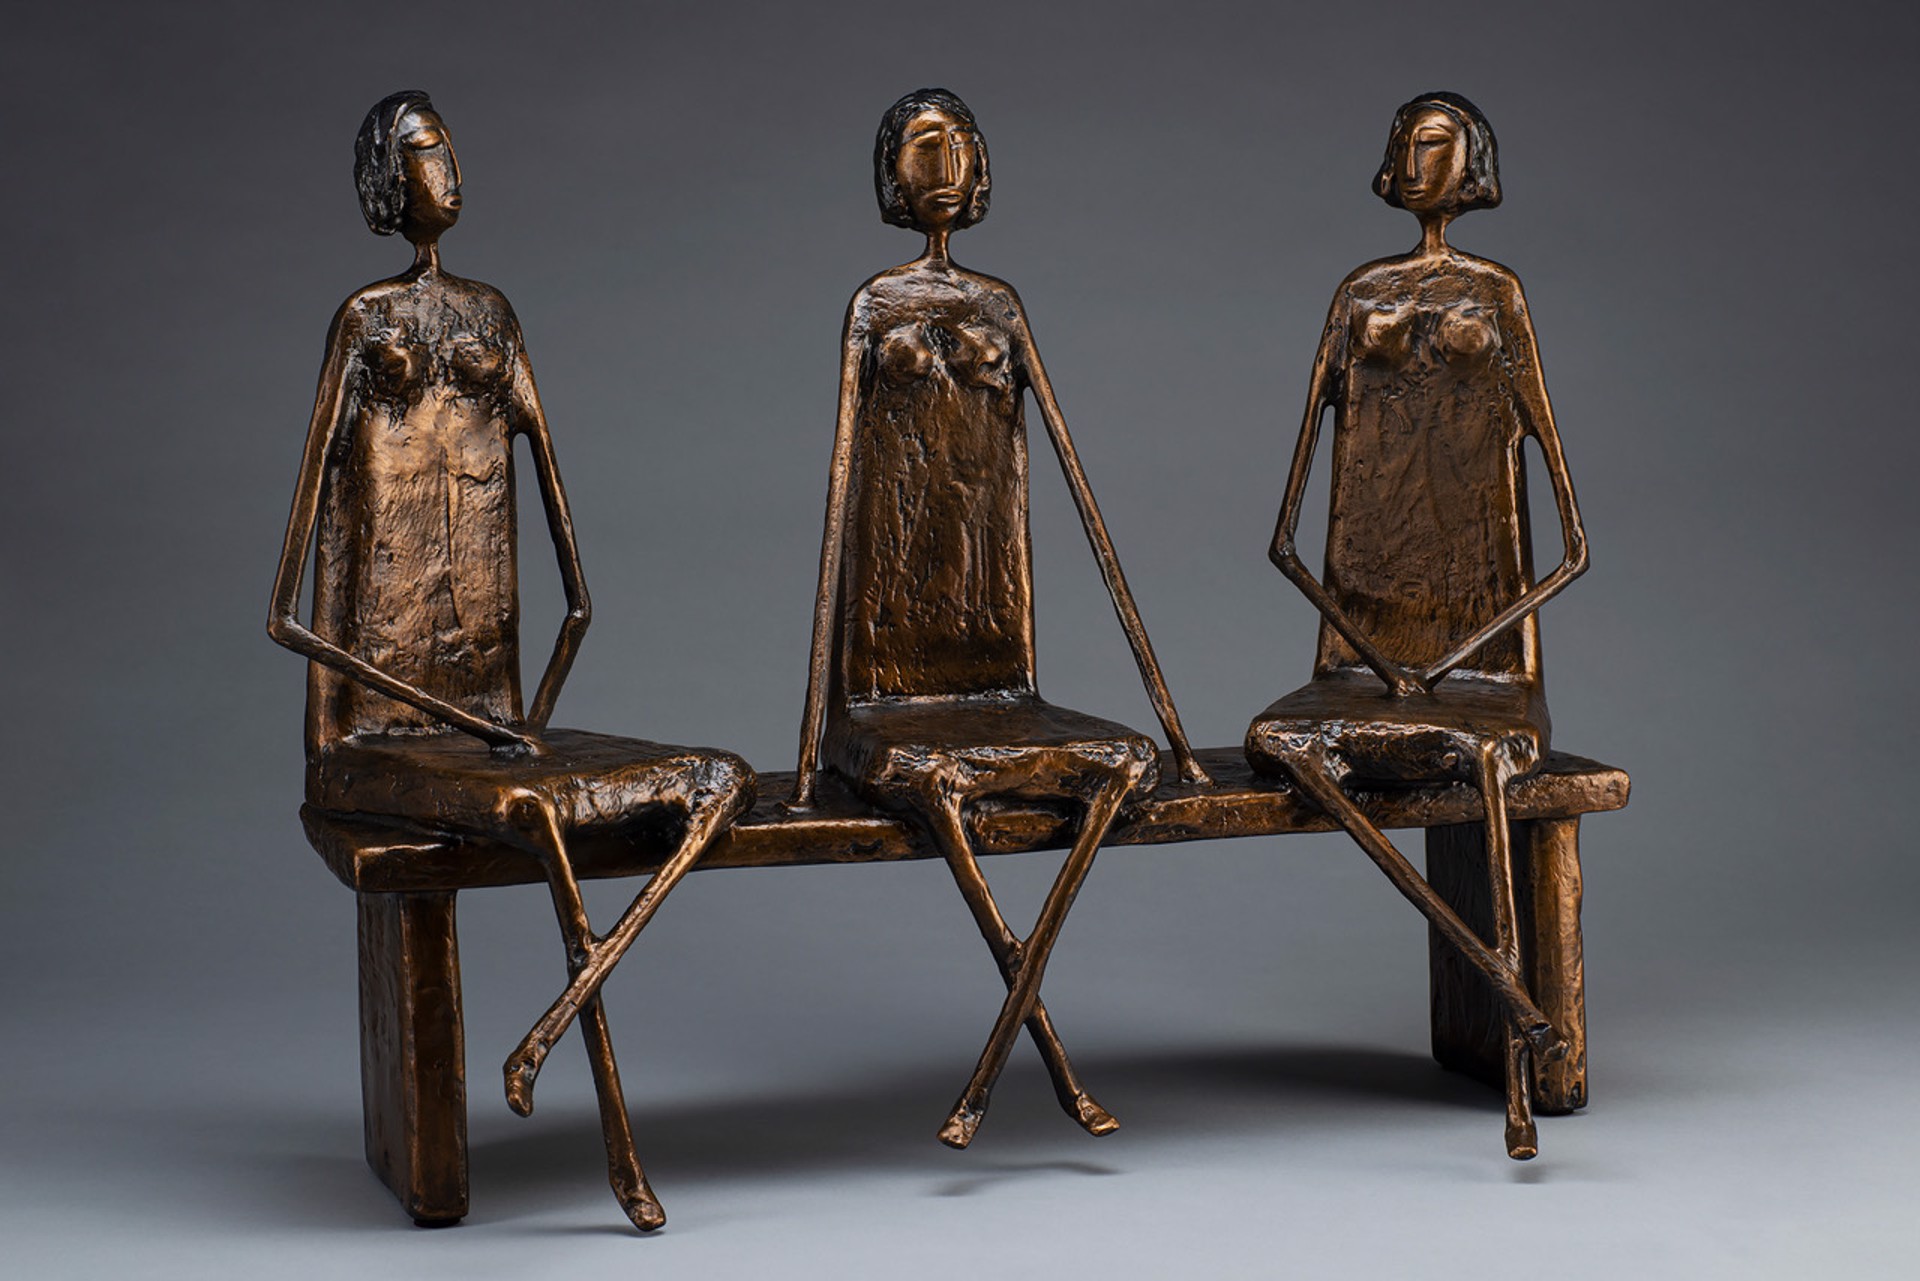 Three Women On a Bench by Allen Wynn